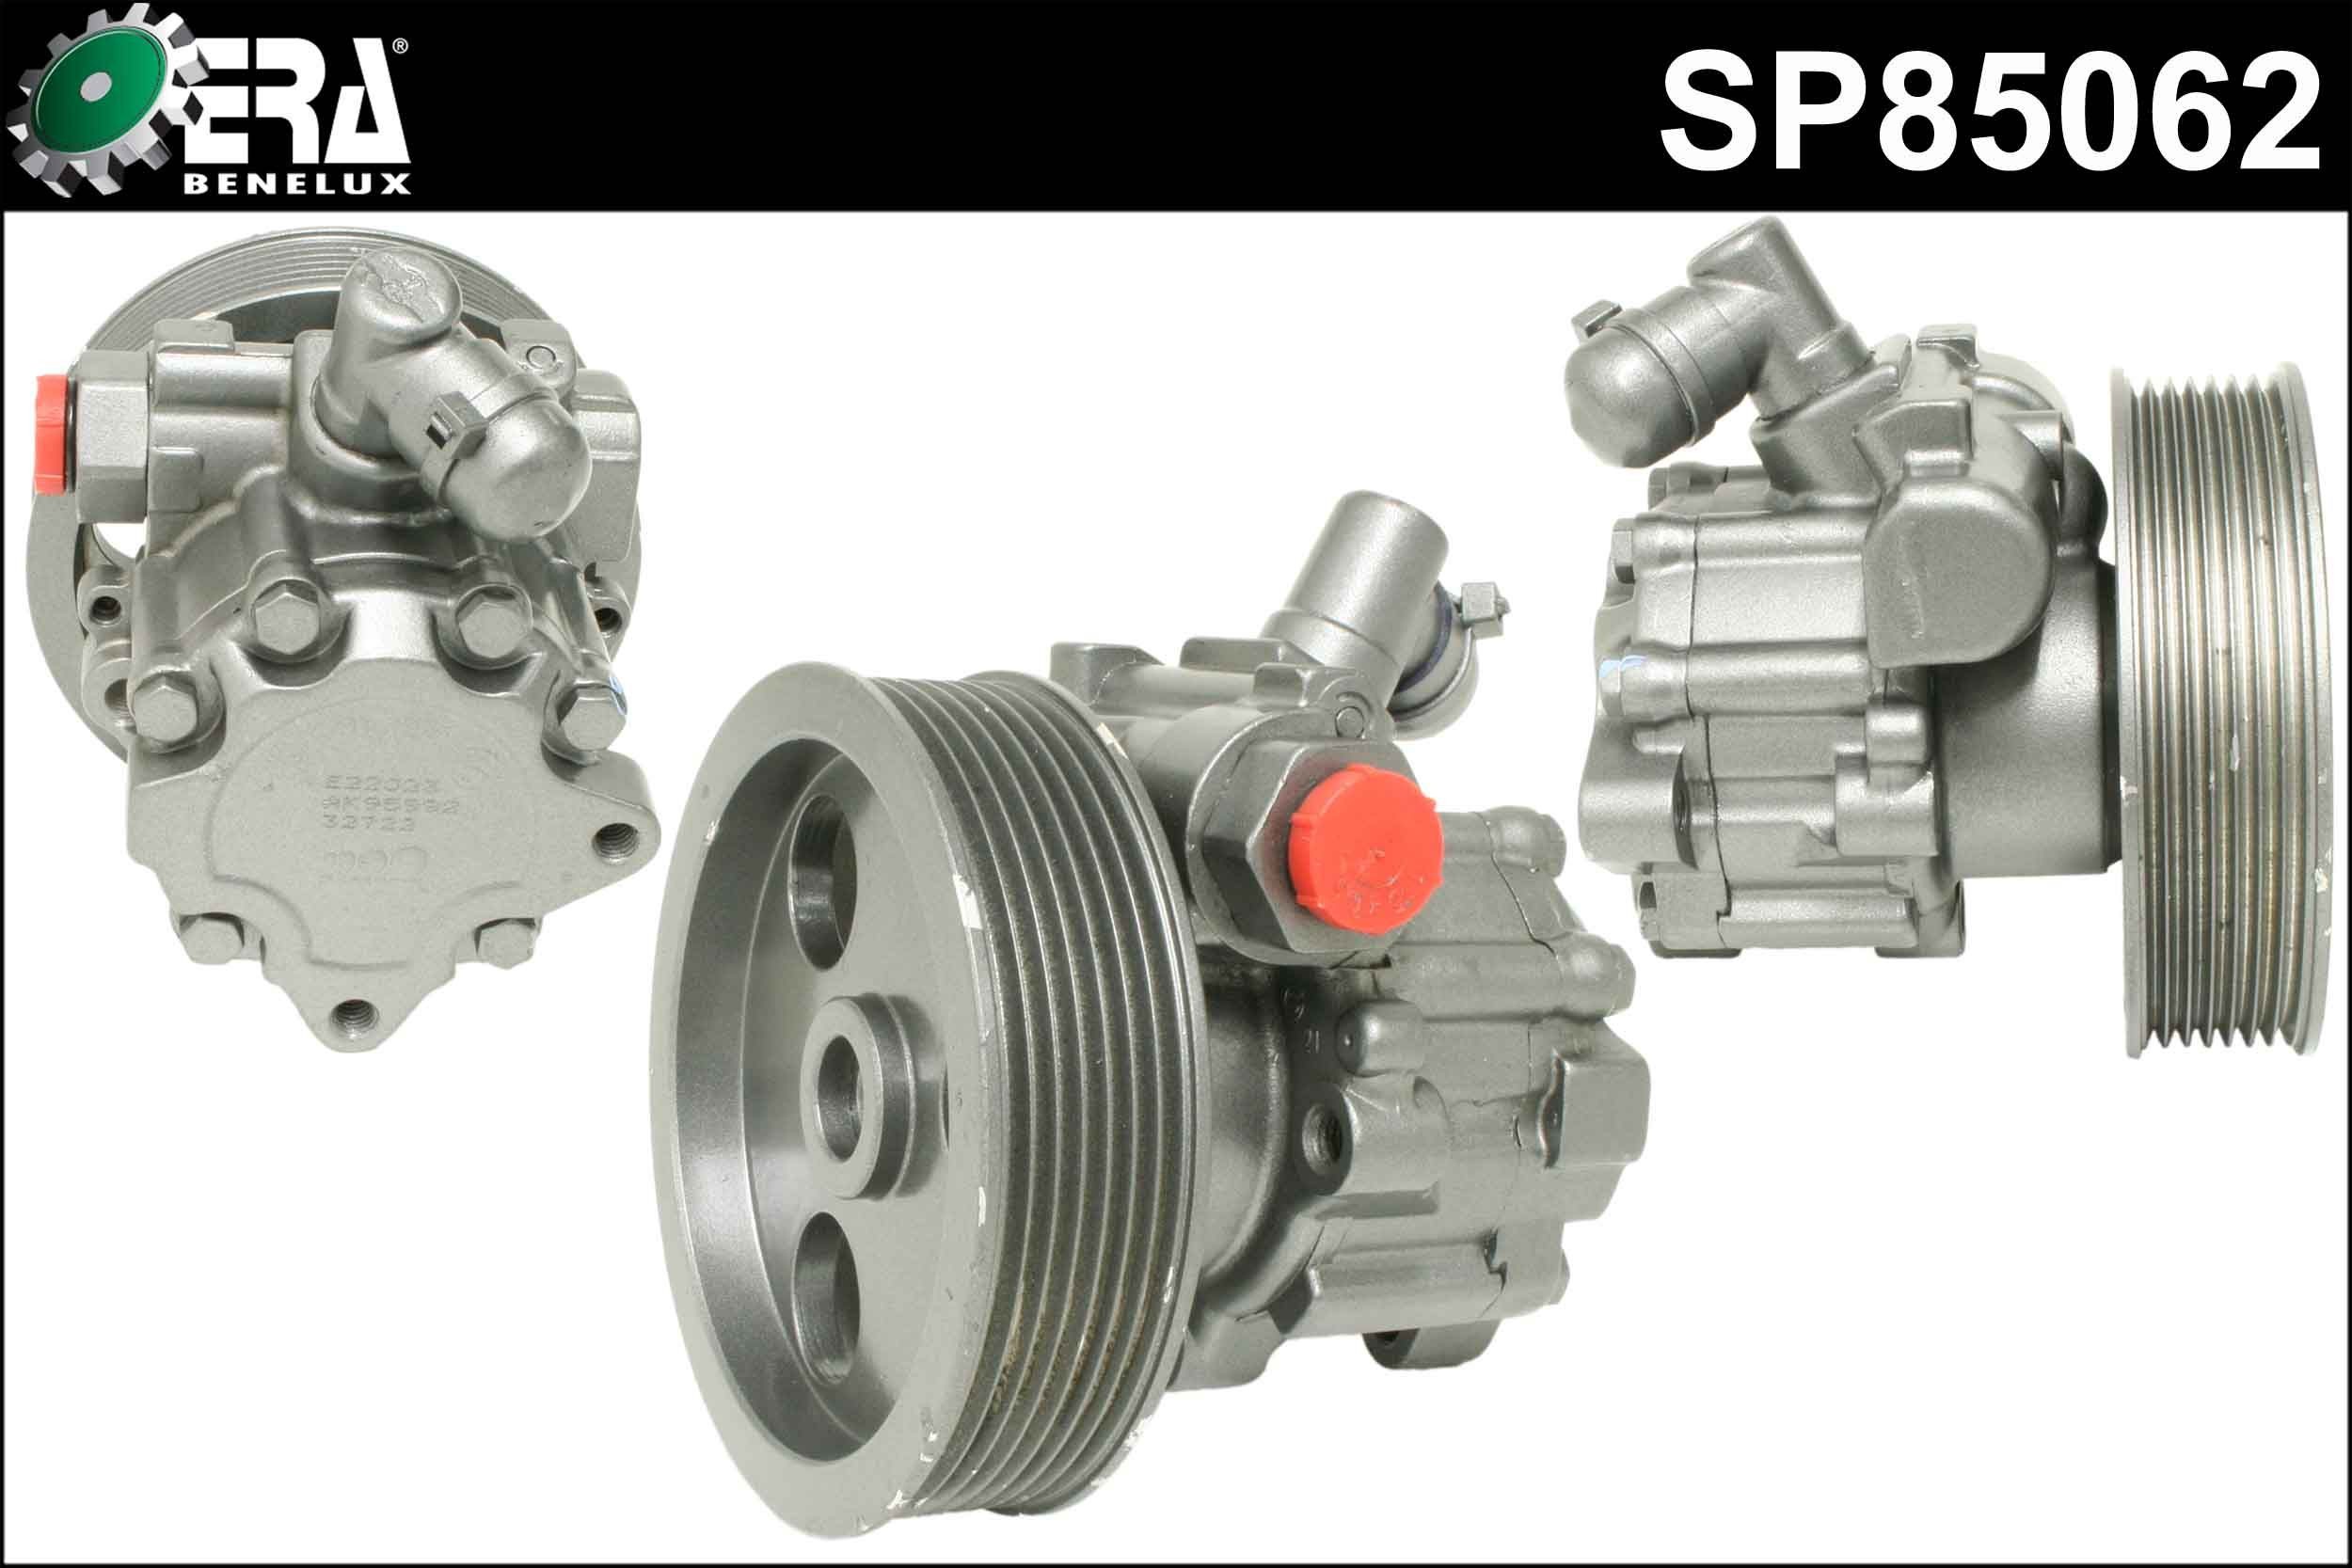 ERA Benelux SP85062 Hydraulic steering pump W164 ML 280 CDI 3.0 4-matic 190 hp Diesel 2009 price